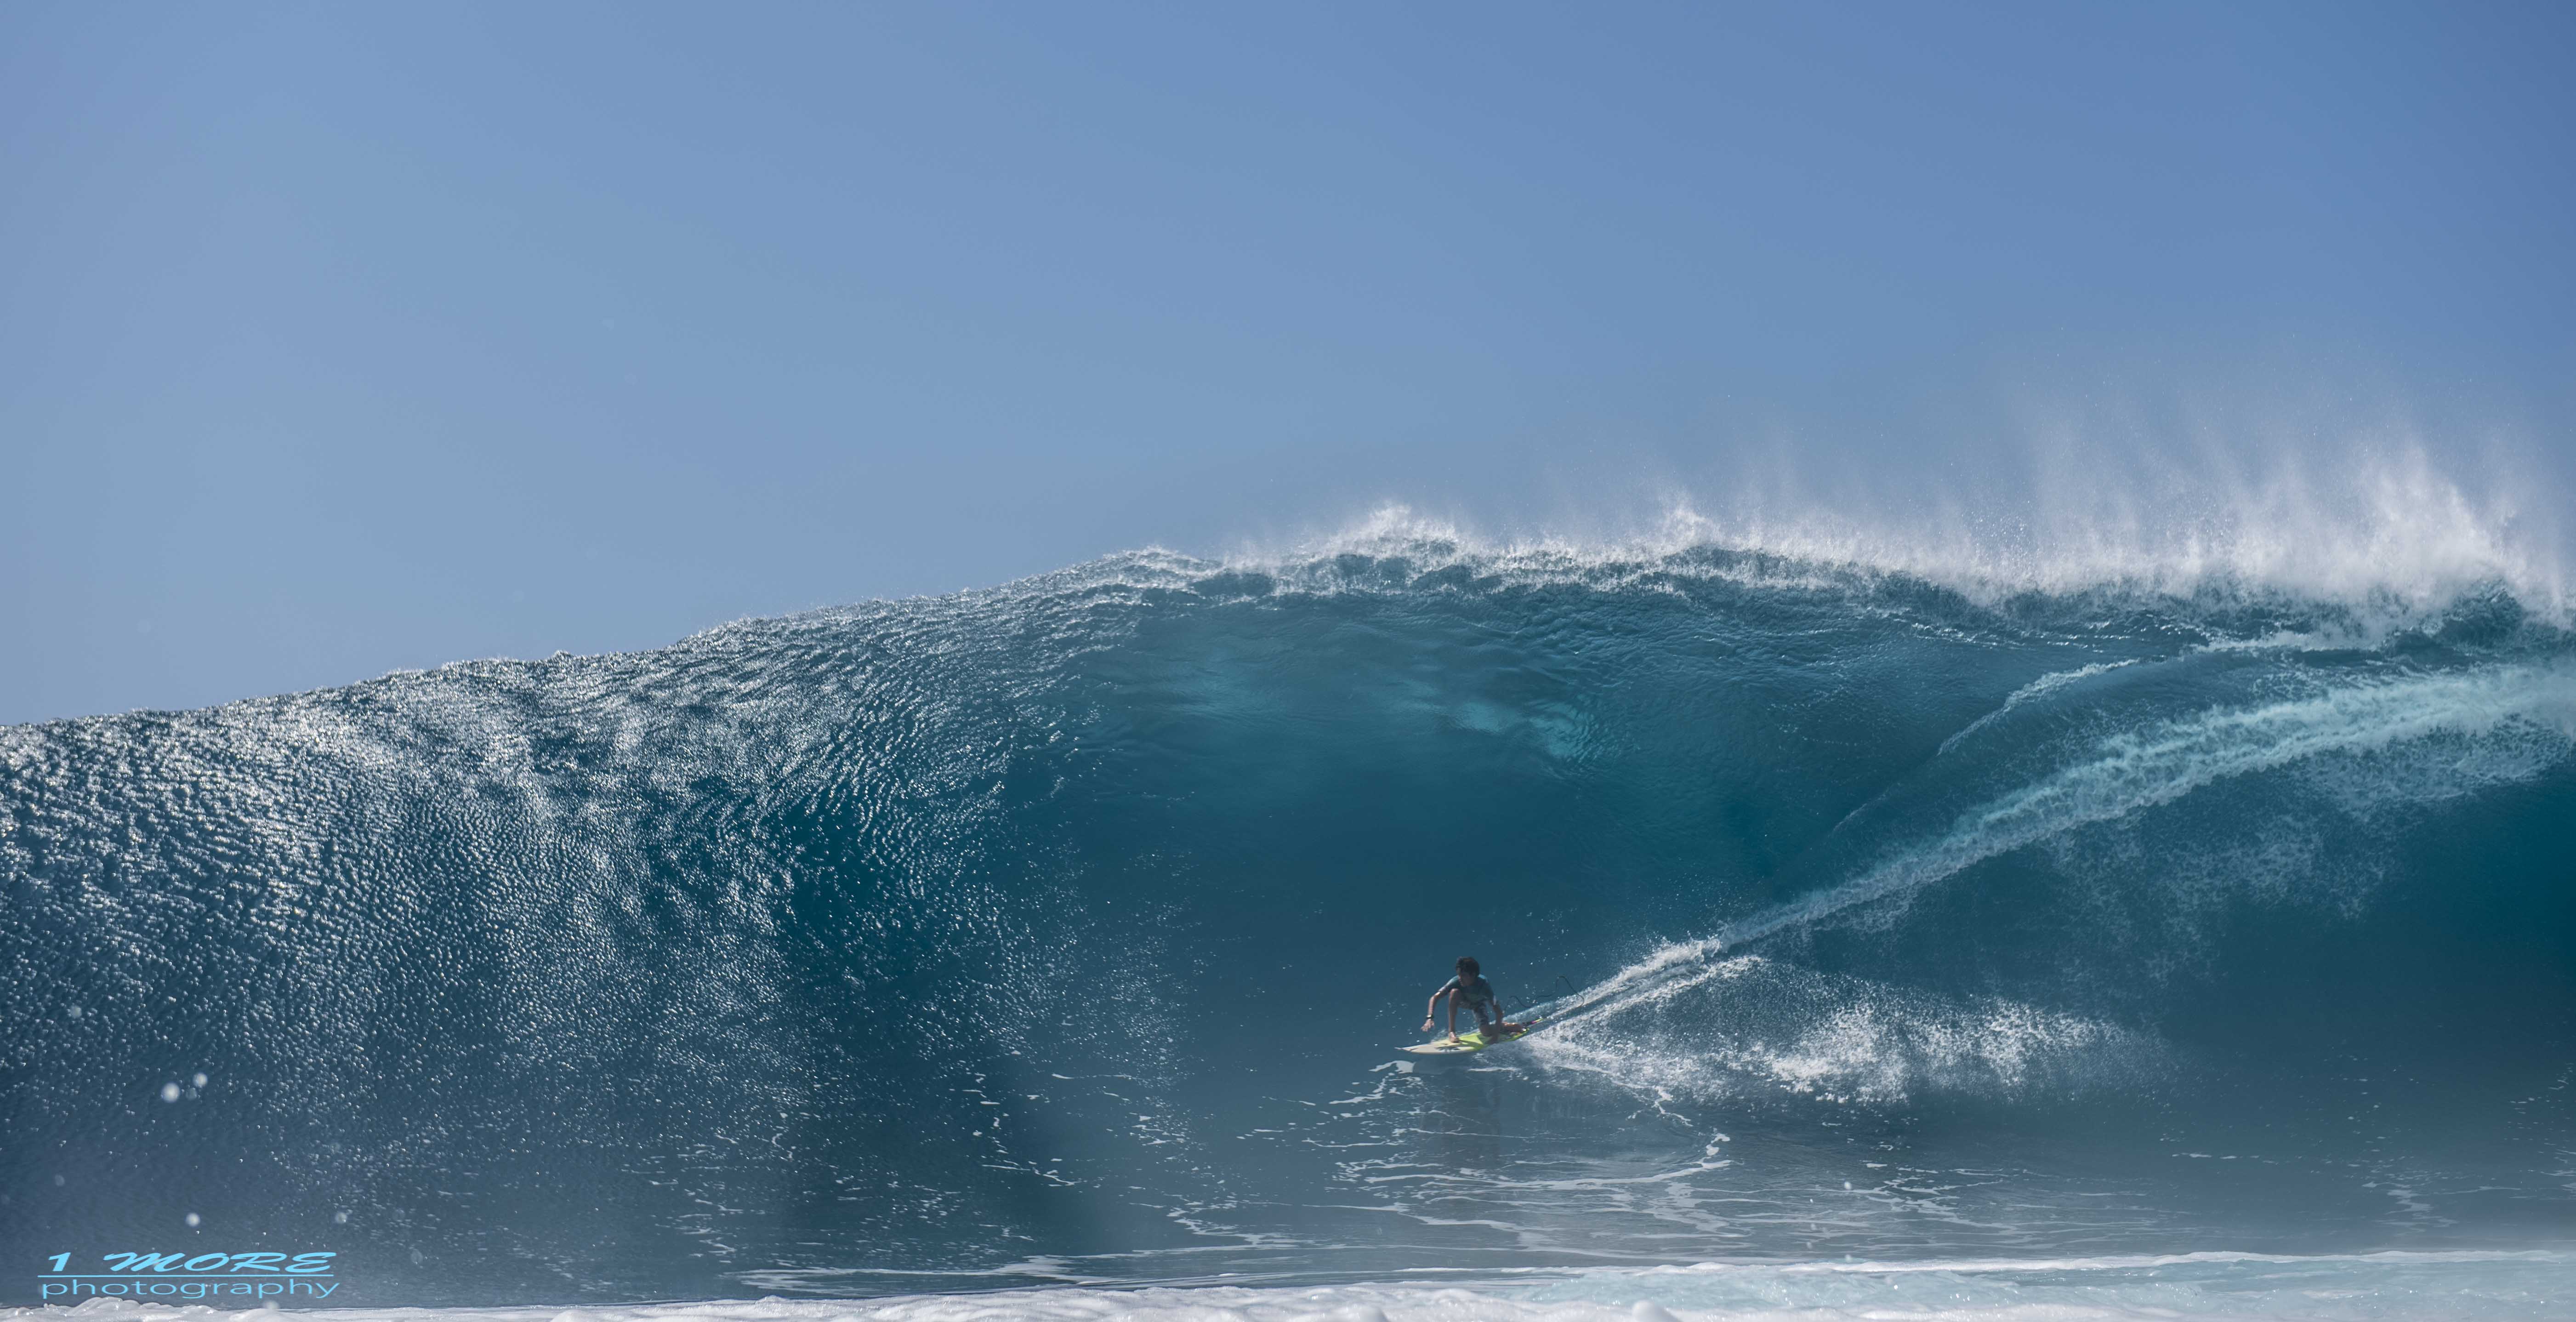 Jackson on a massive wave at Honolua Bay Photo: 1morephotography 